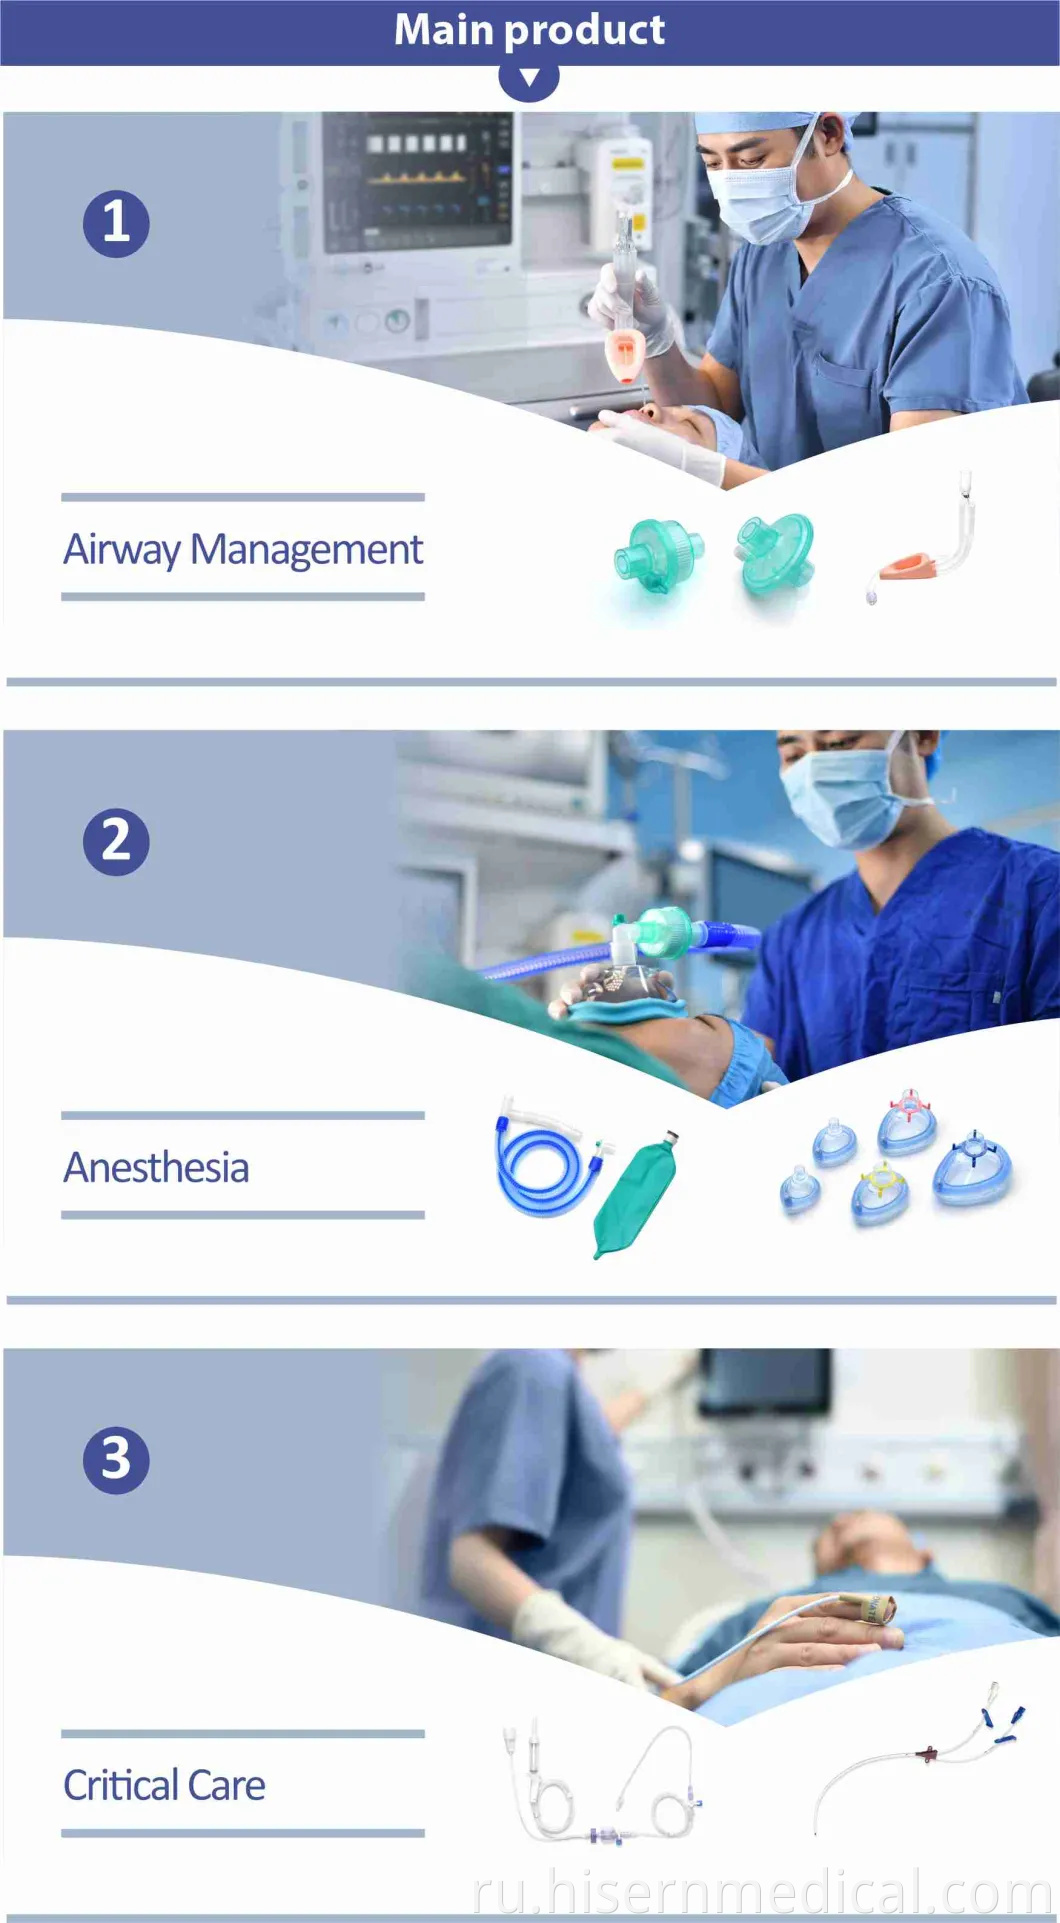 China Hisern Airway Management Одноразовая гортанная маска для дыхательных путей (Proseal)